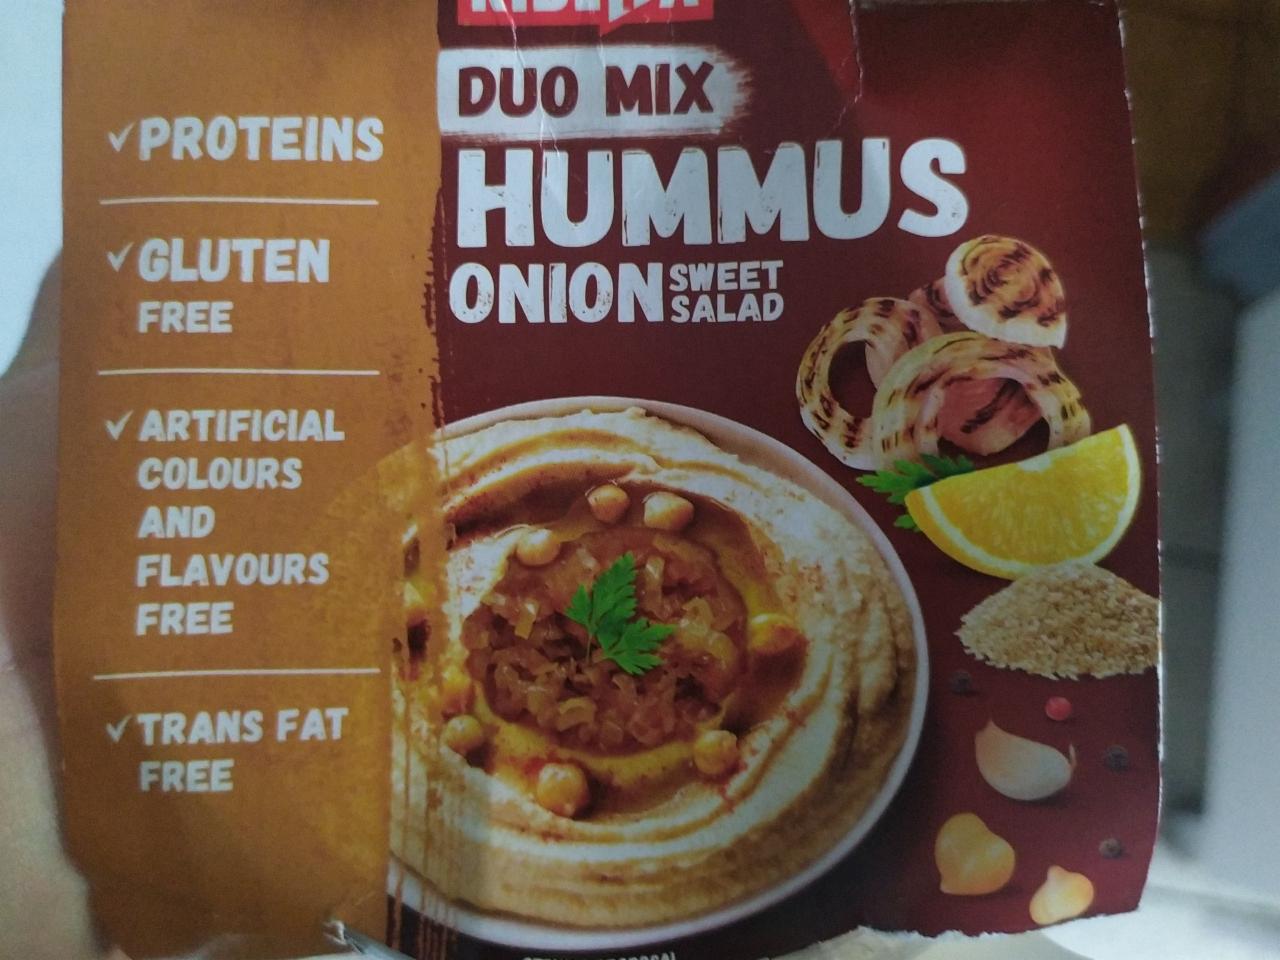 Zdjęcia - hummus duo mix onion sweet salad